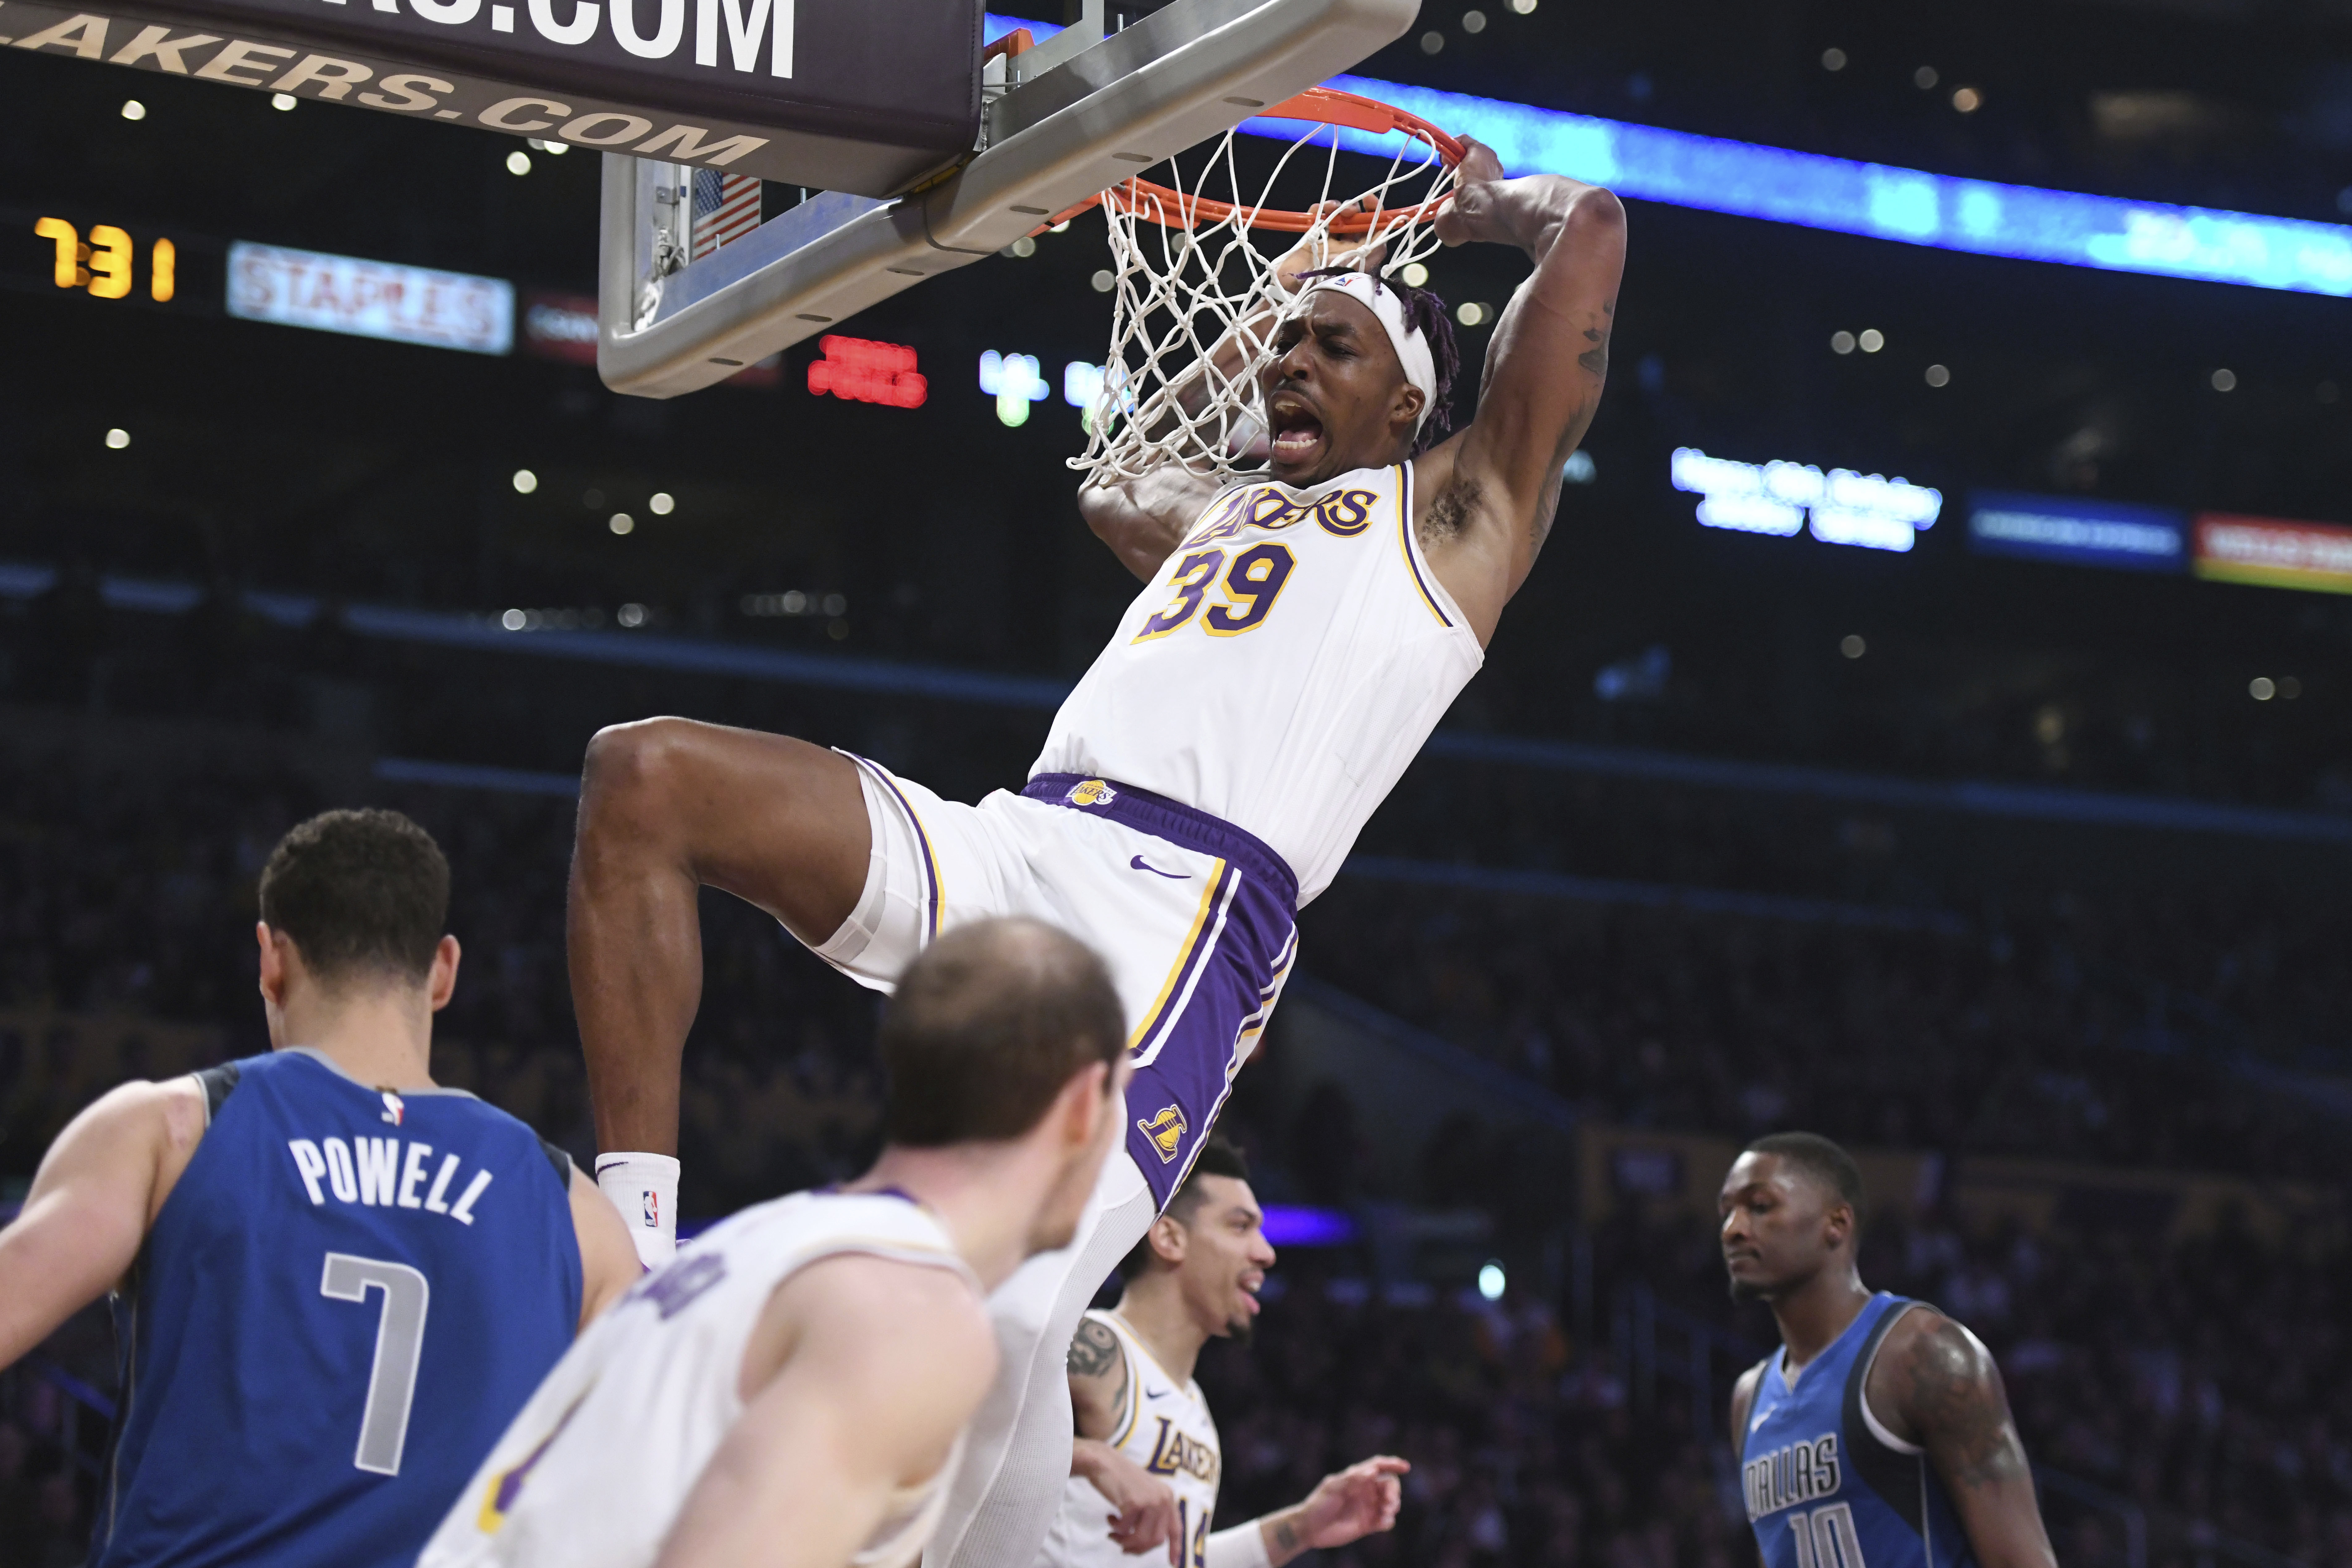 LeBron reaches assist milestone as Lakers beat Mavericks